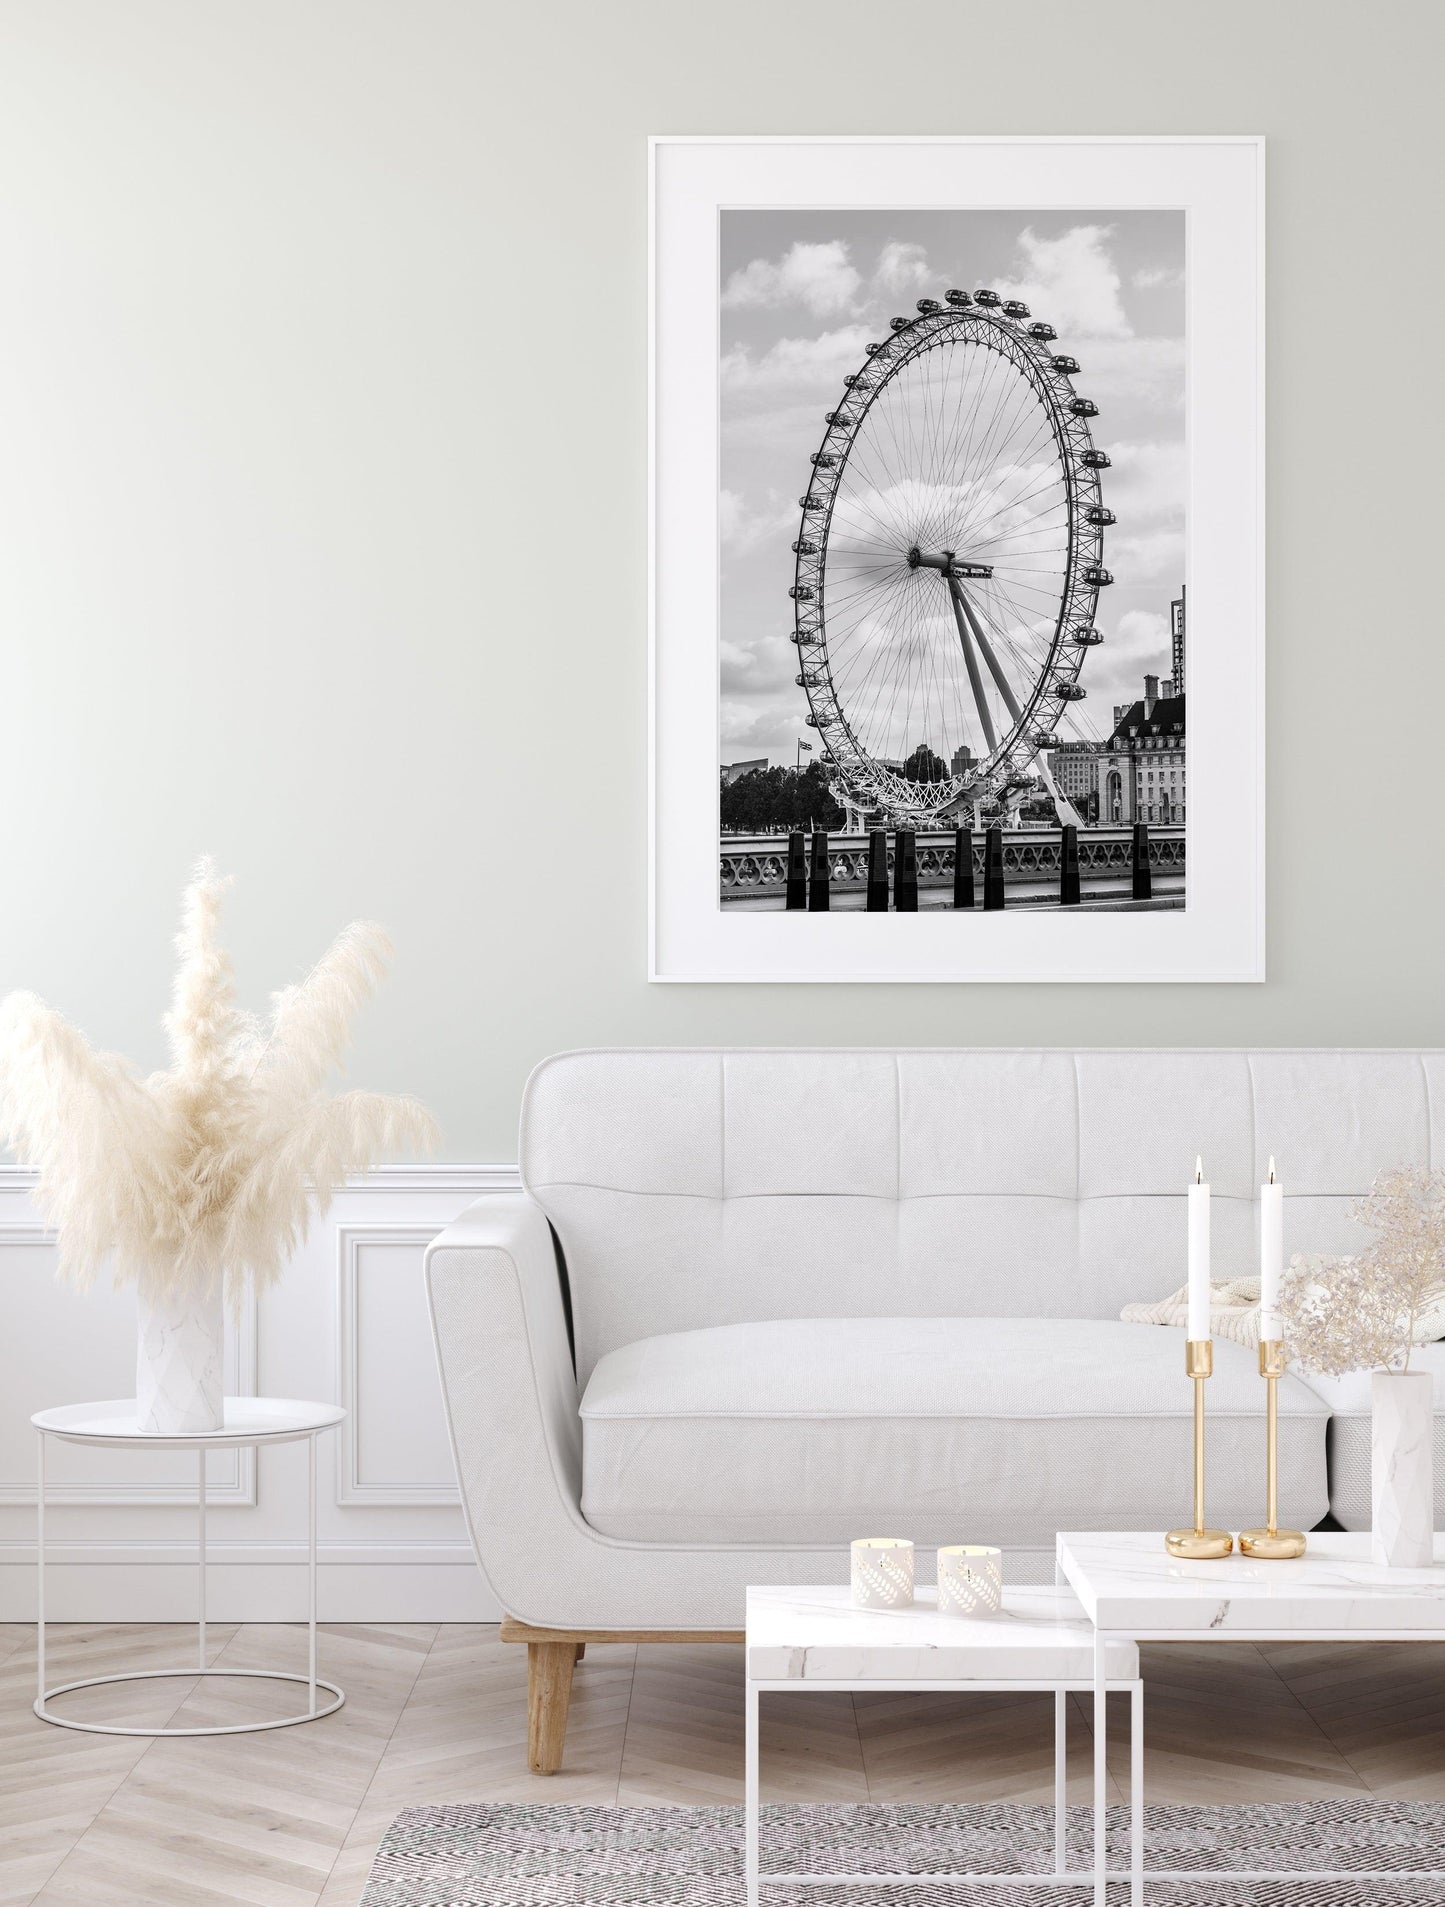 Black and White London Eye Ferris Wheel Photography Print - Departures Print Shop